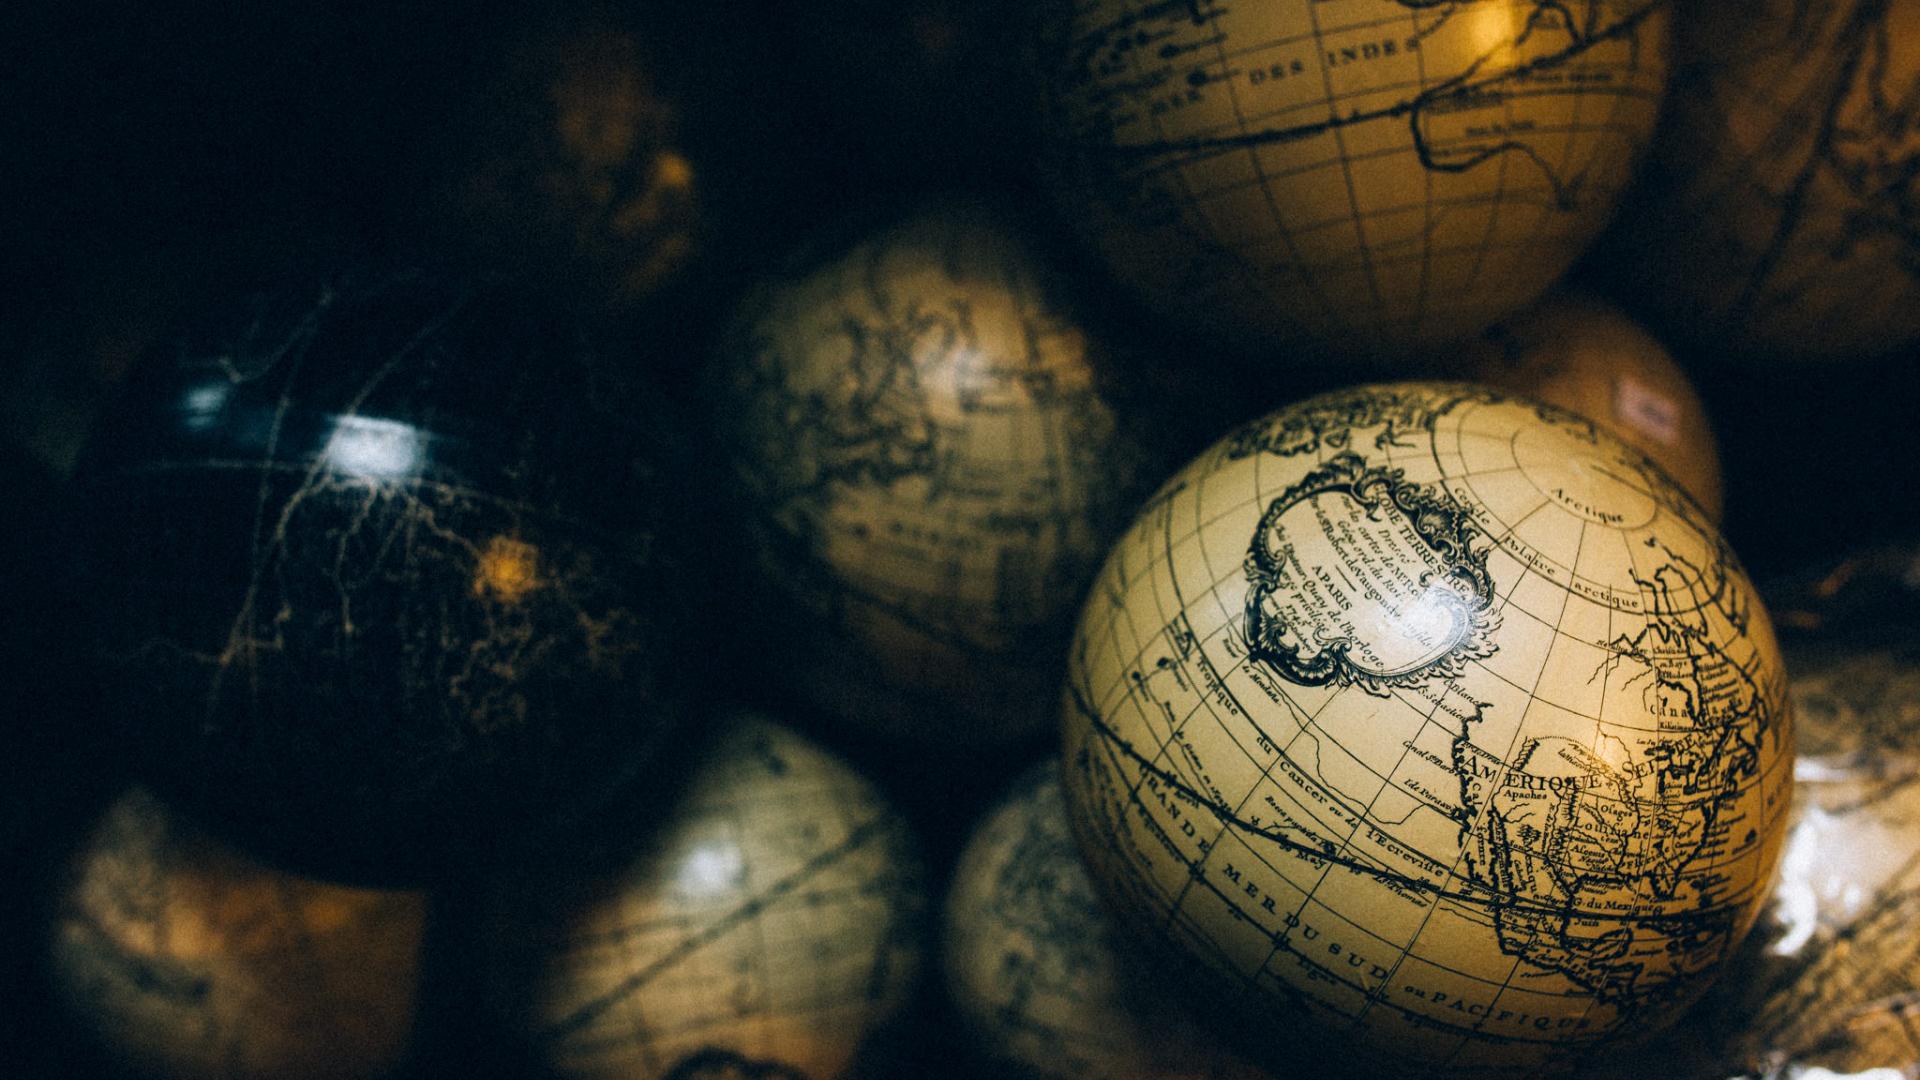 Antique world globes